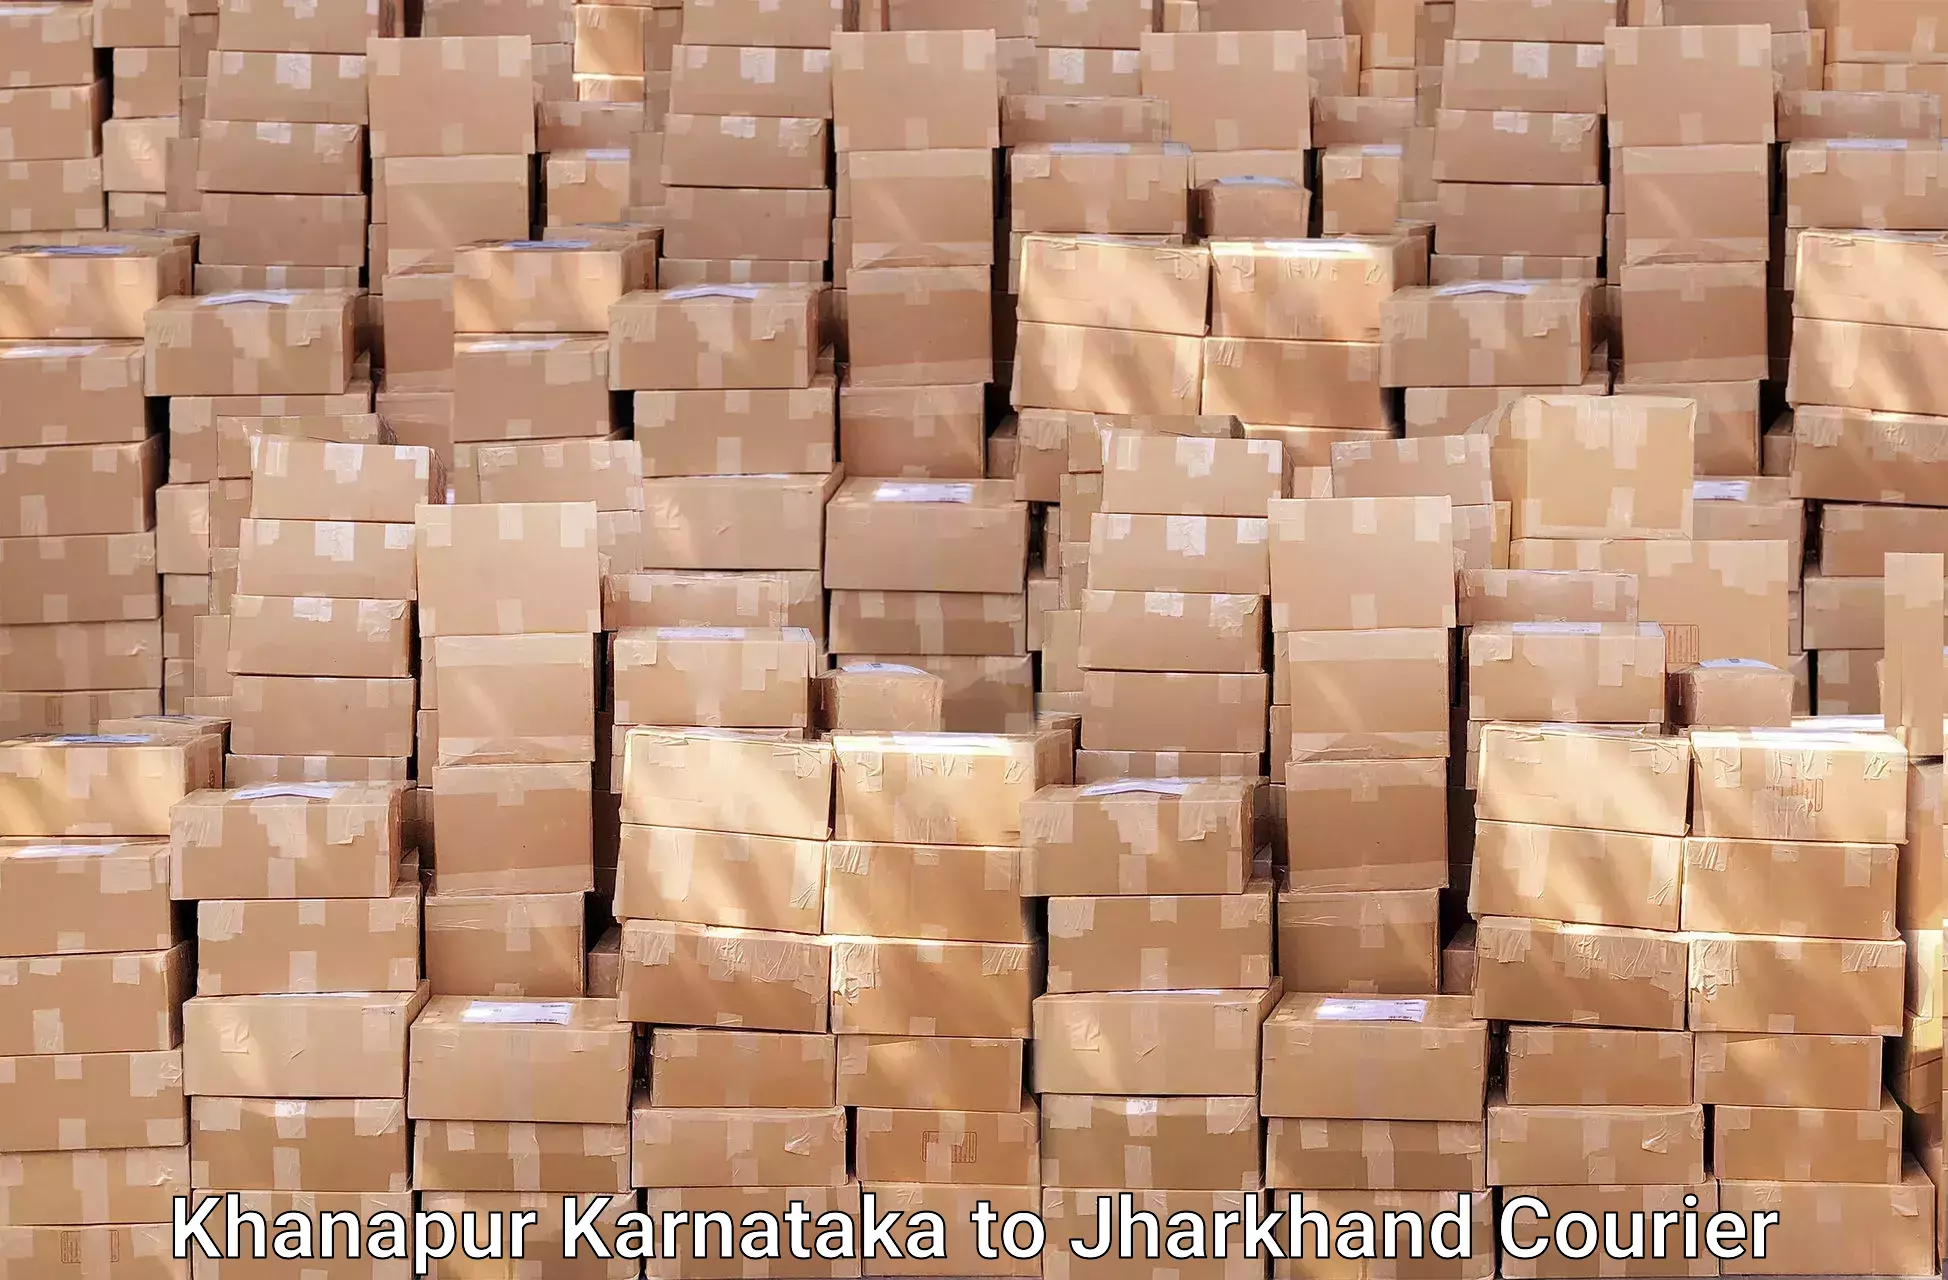 Professional relocation services in Khanapur Karnataka to Peterbar